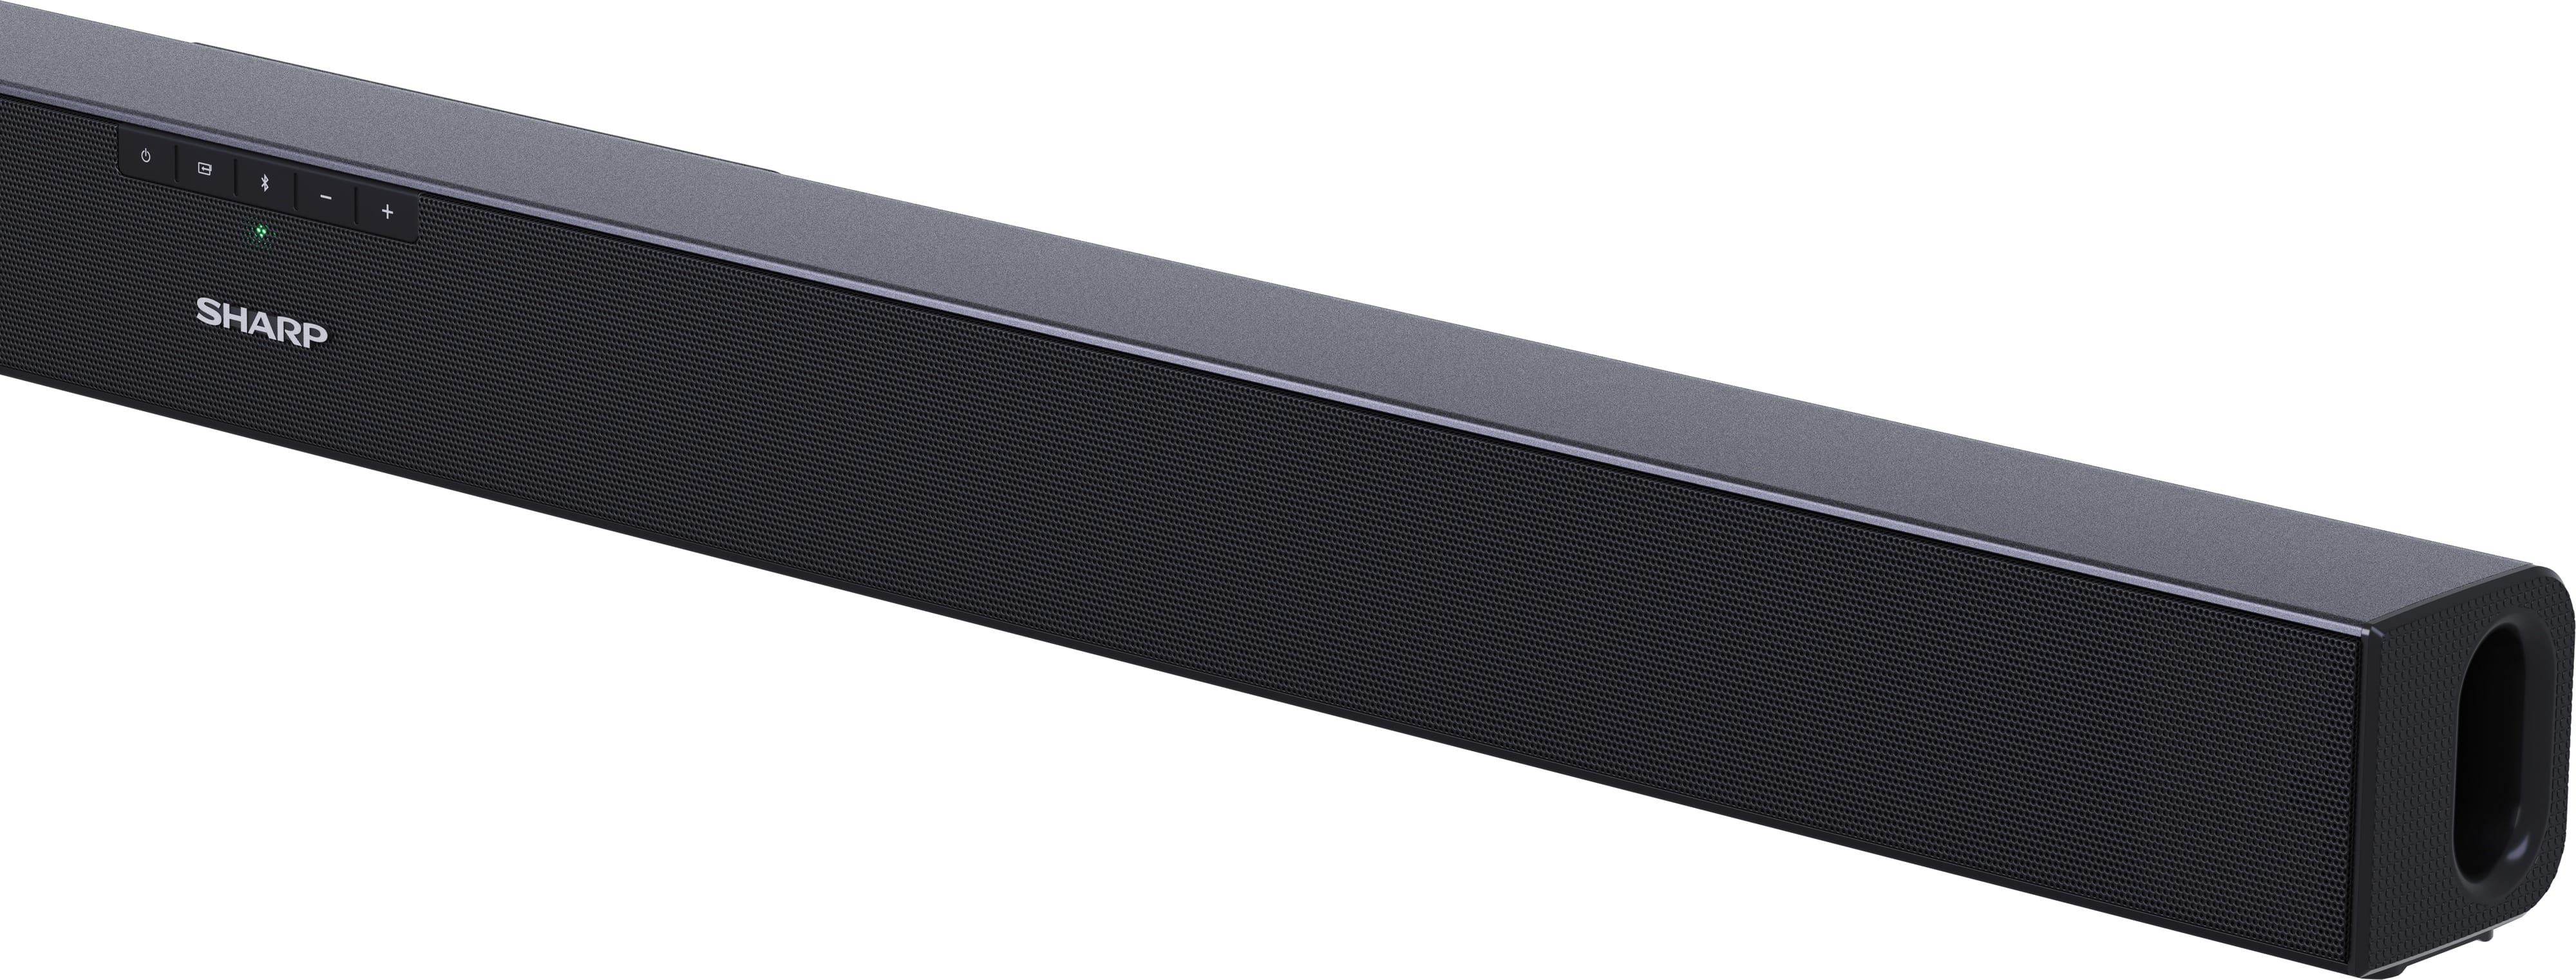 SHARP Soundbar HT-SB140 (MT), schwarz, Bluetooth, HDMI, 150 W